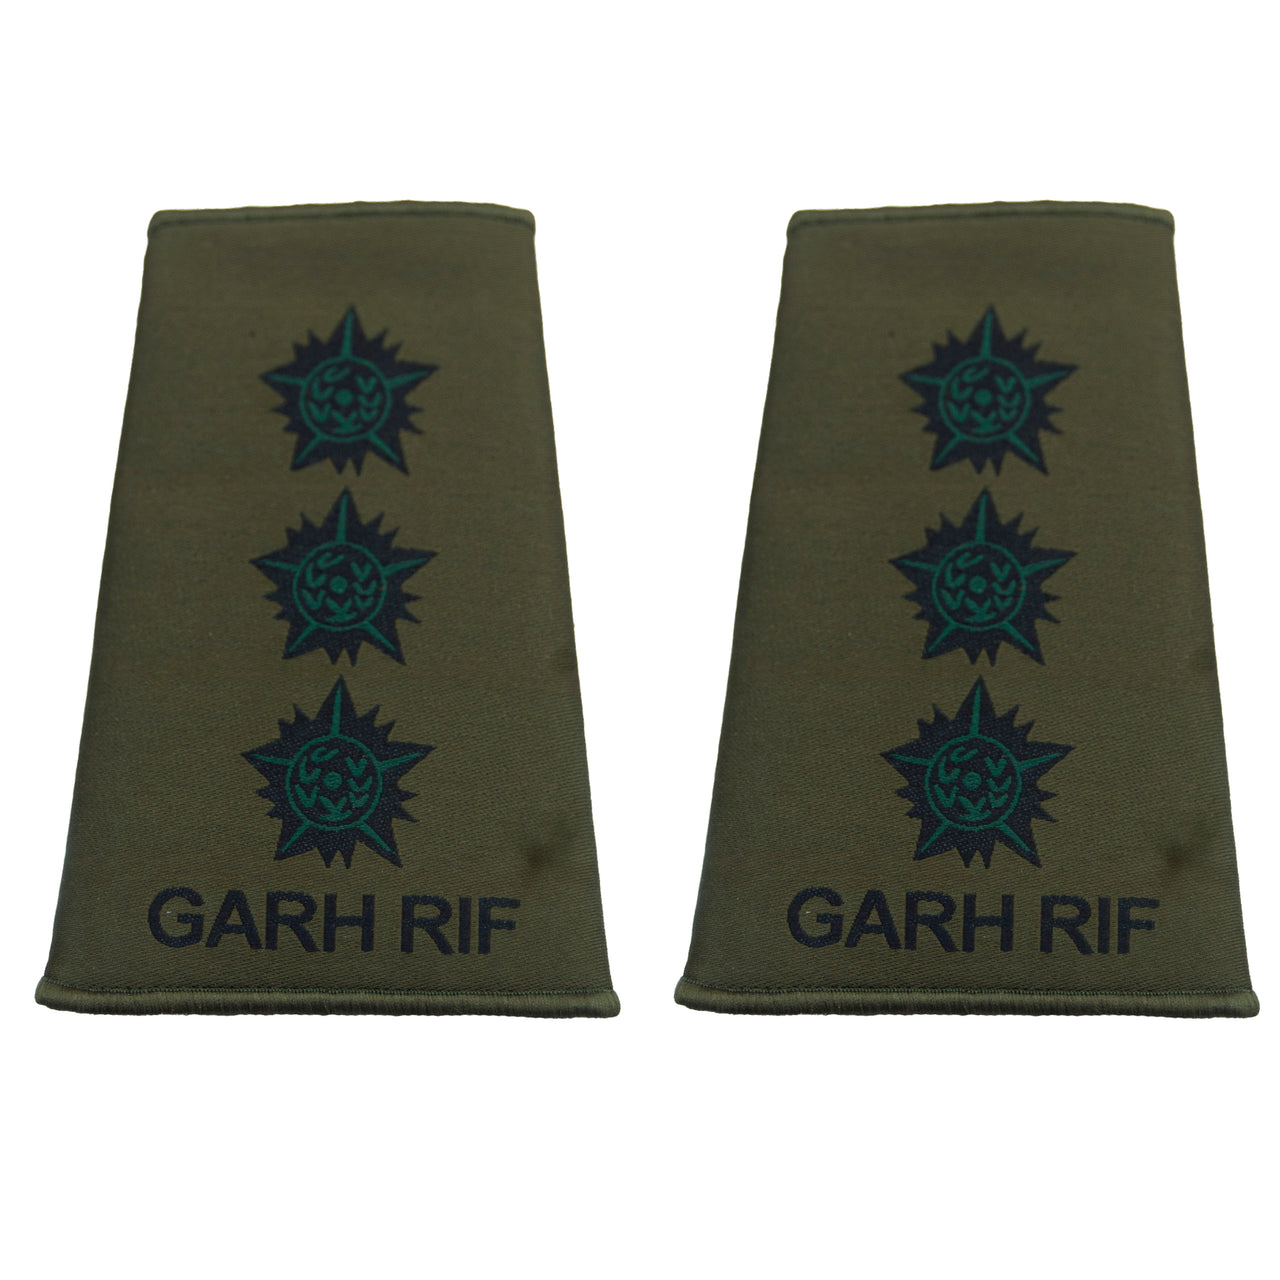 Indian Army Rank Epaulettes - Garhwal Rifles